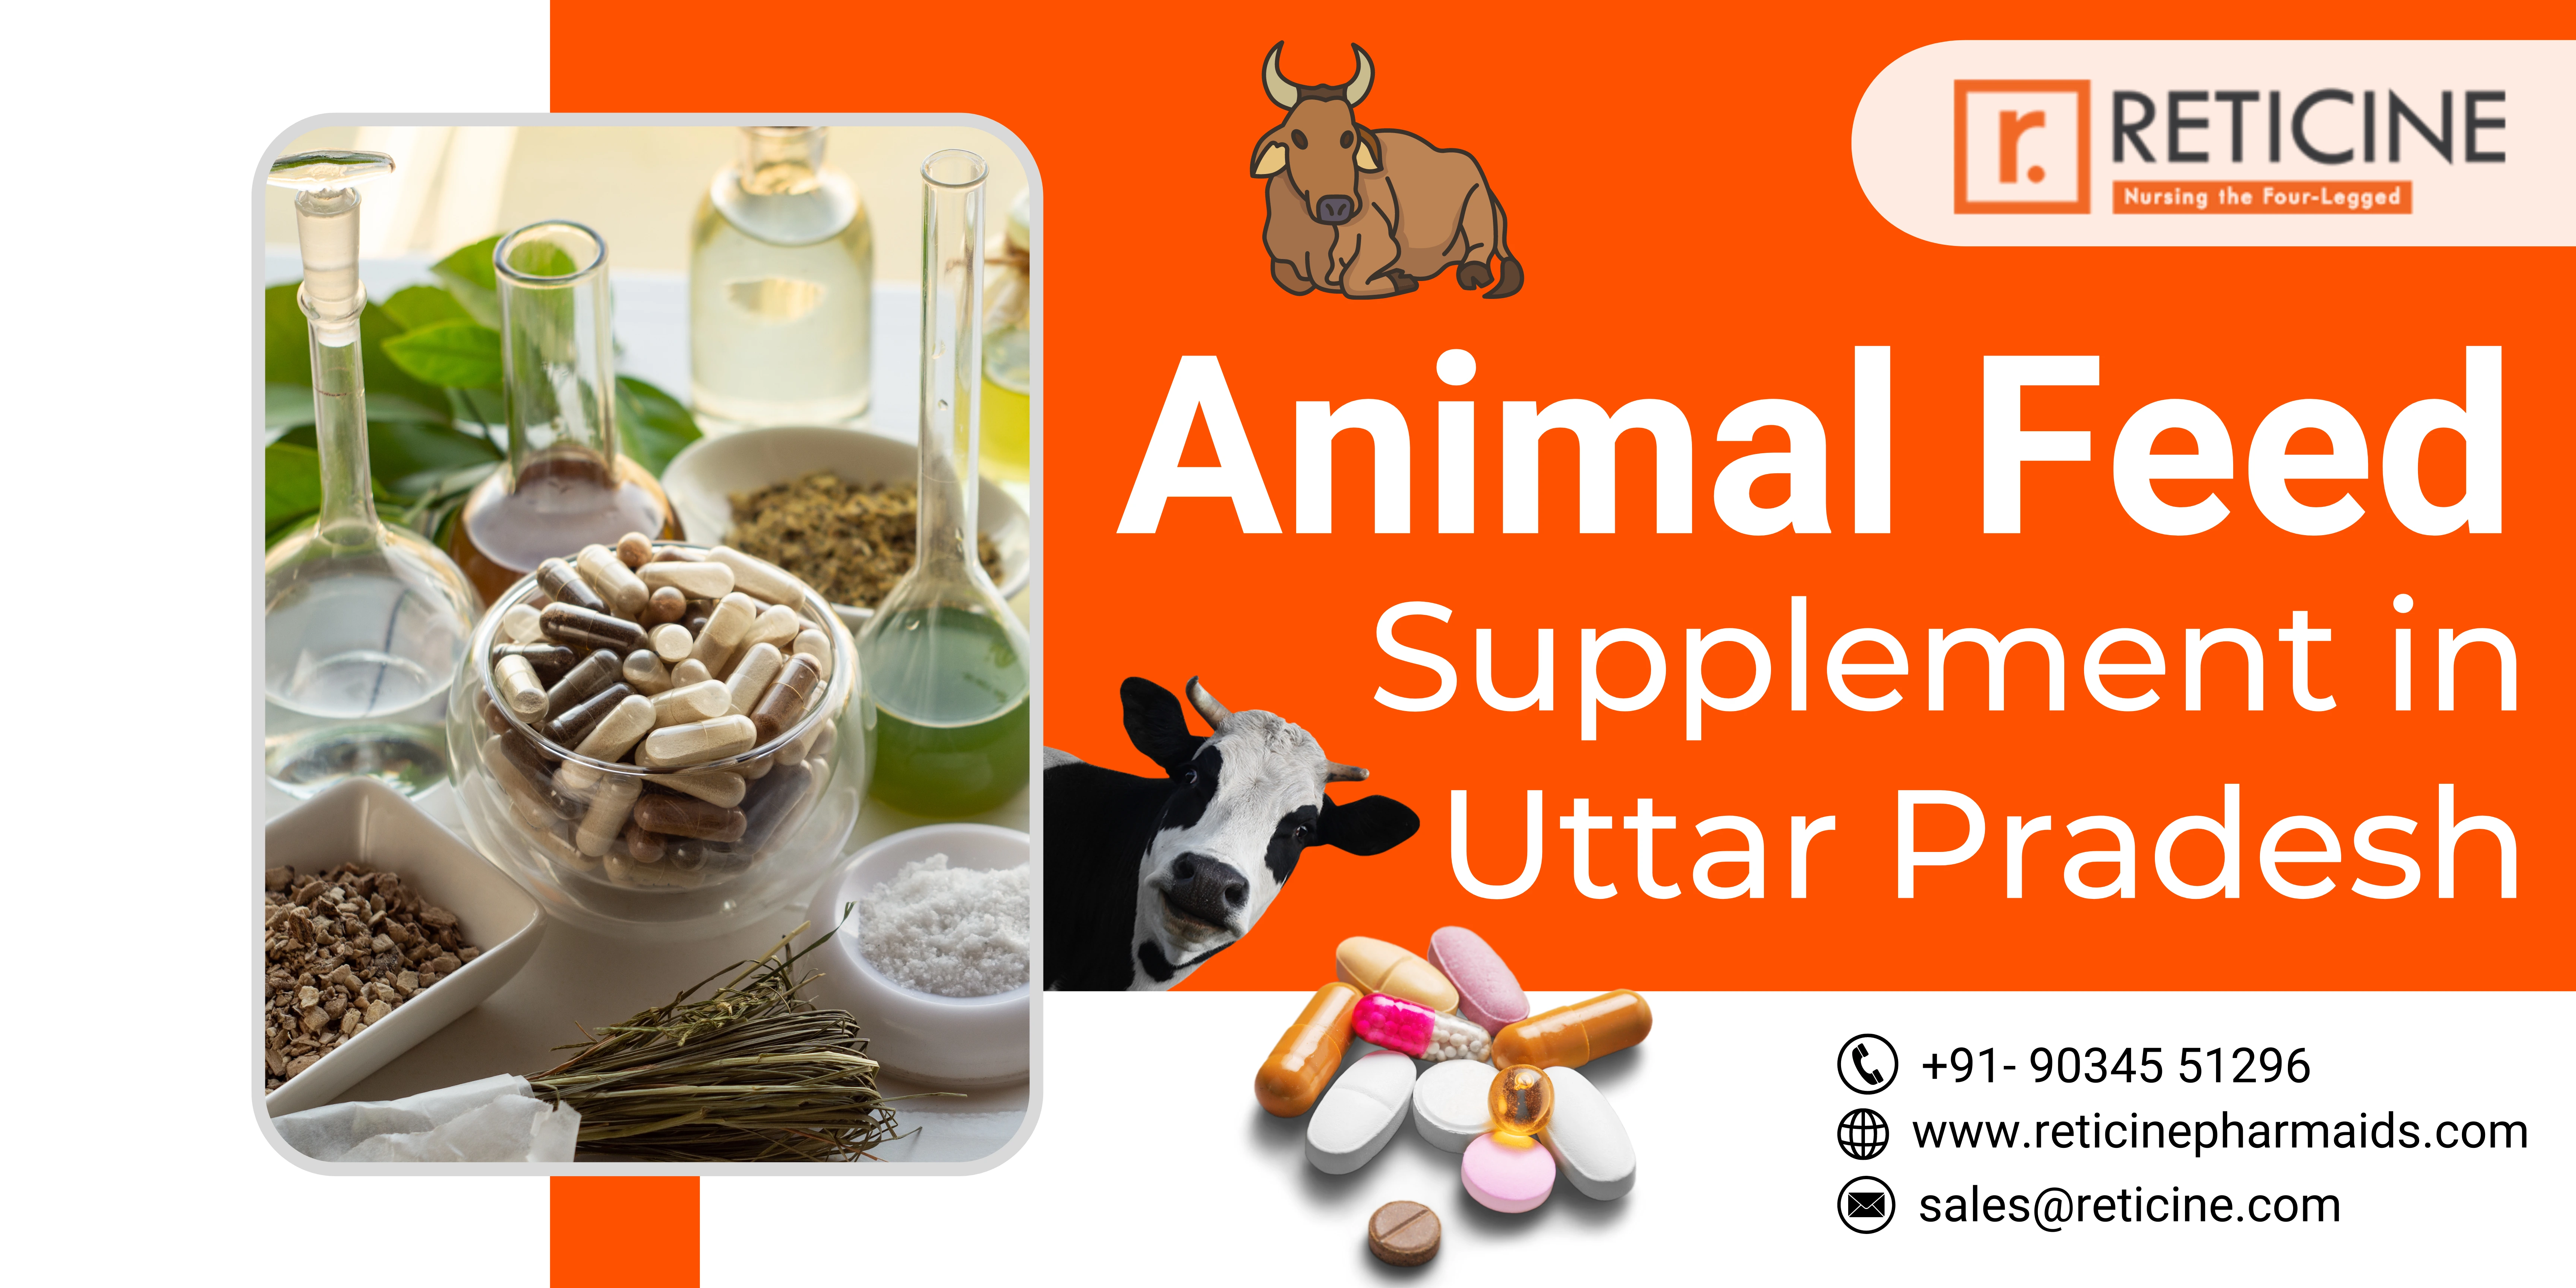 Animal Feed Supplement in Uttar Pradesh | Reticine Pharmaids